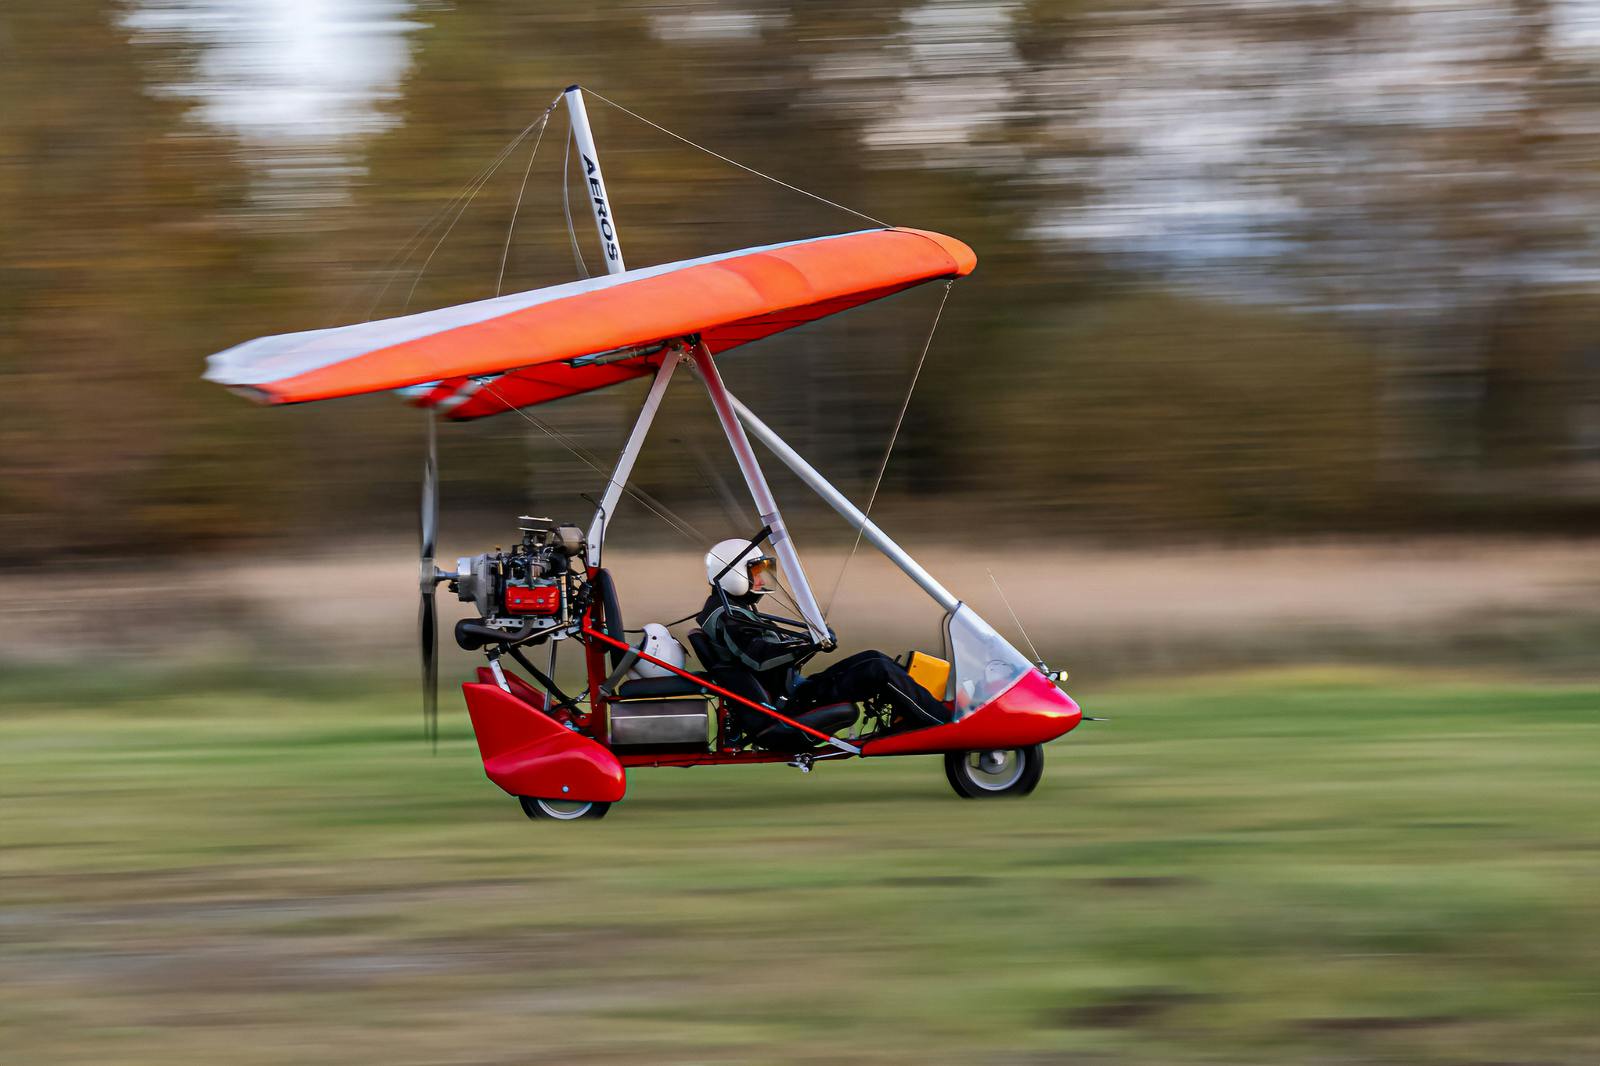 Marek Z. on his motor glider.